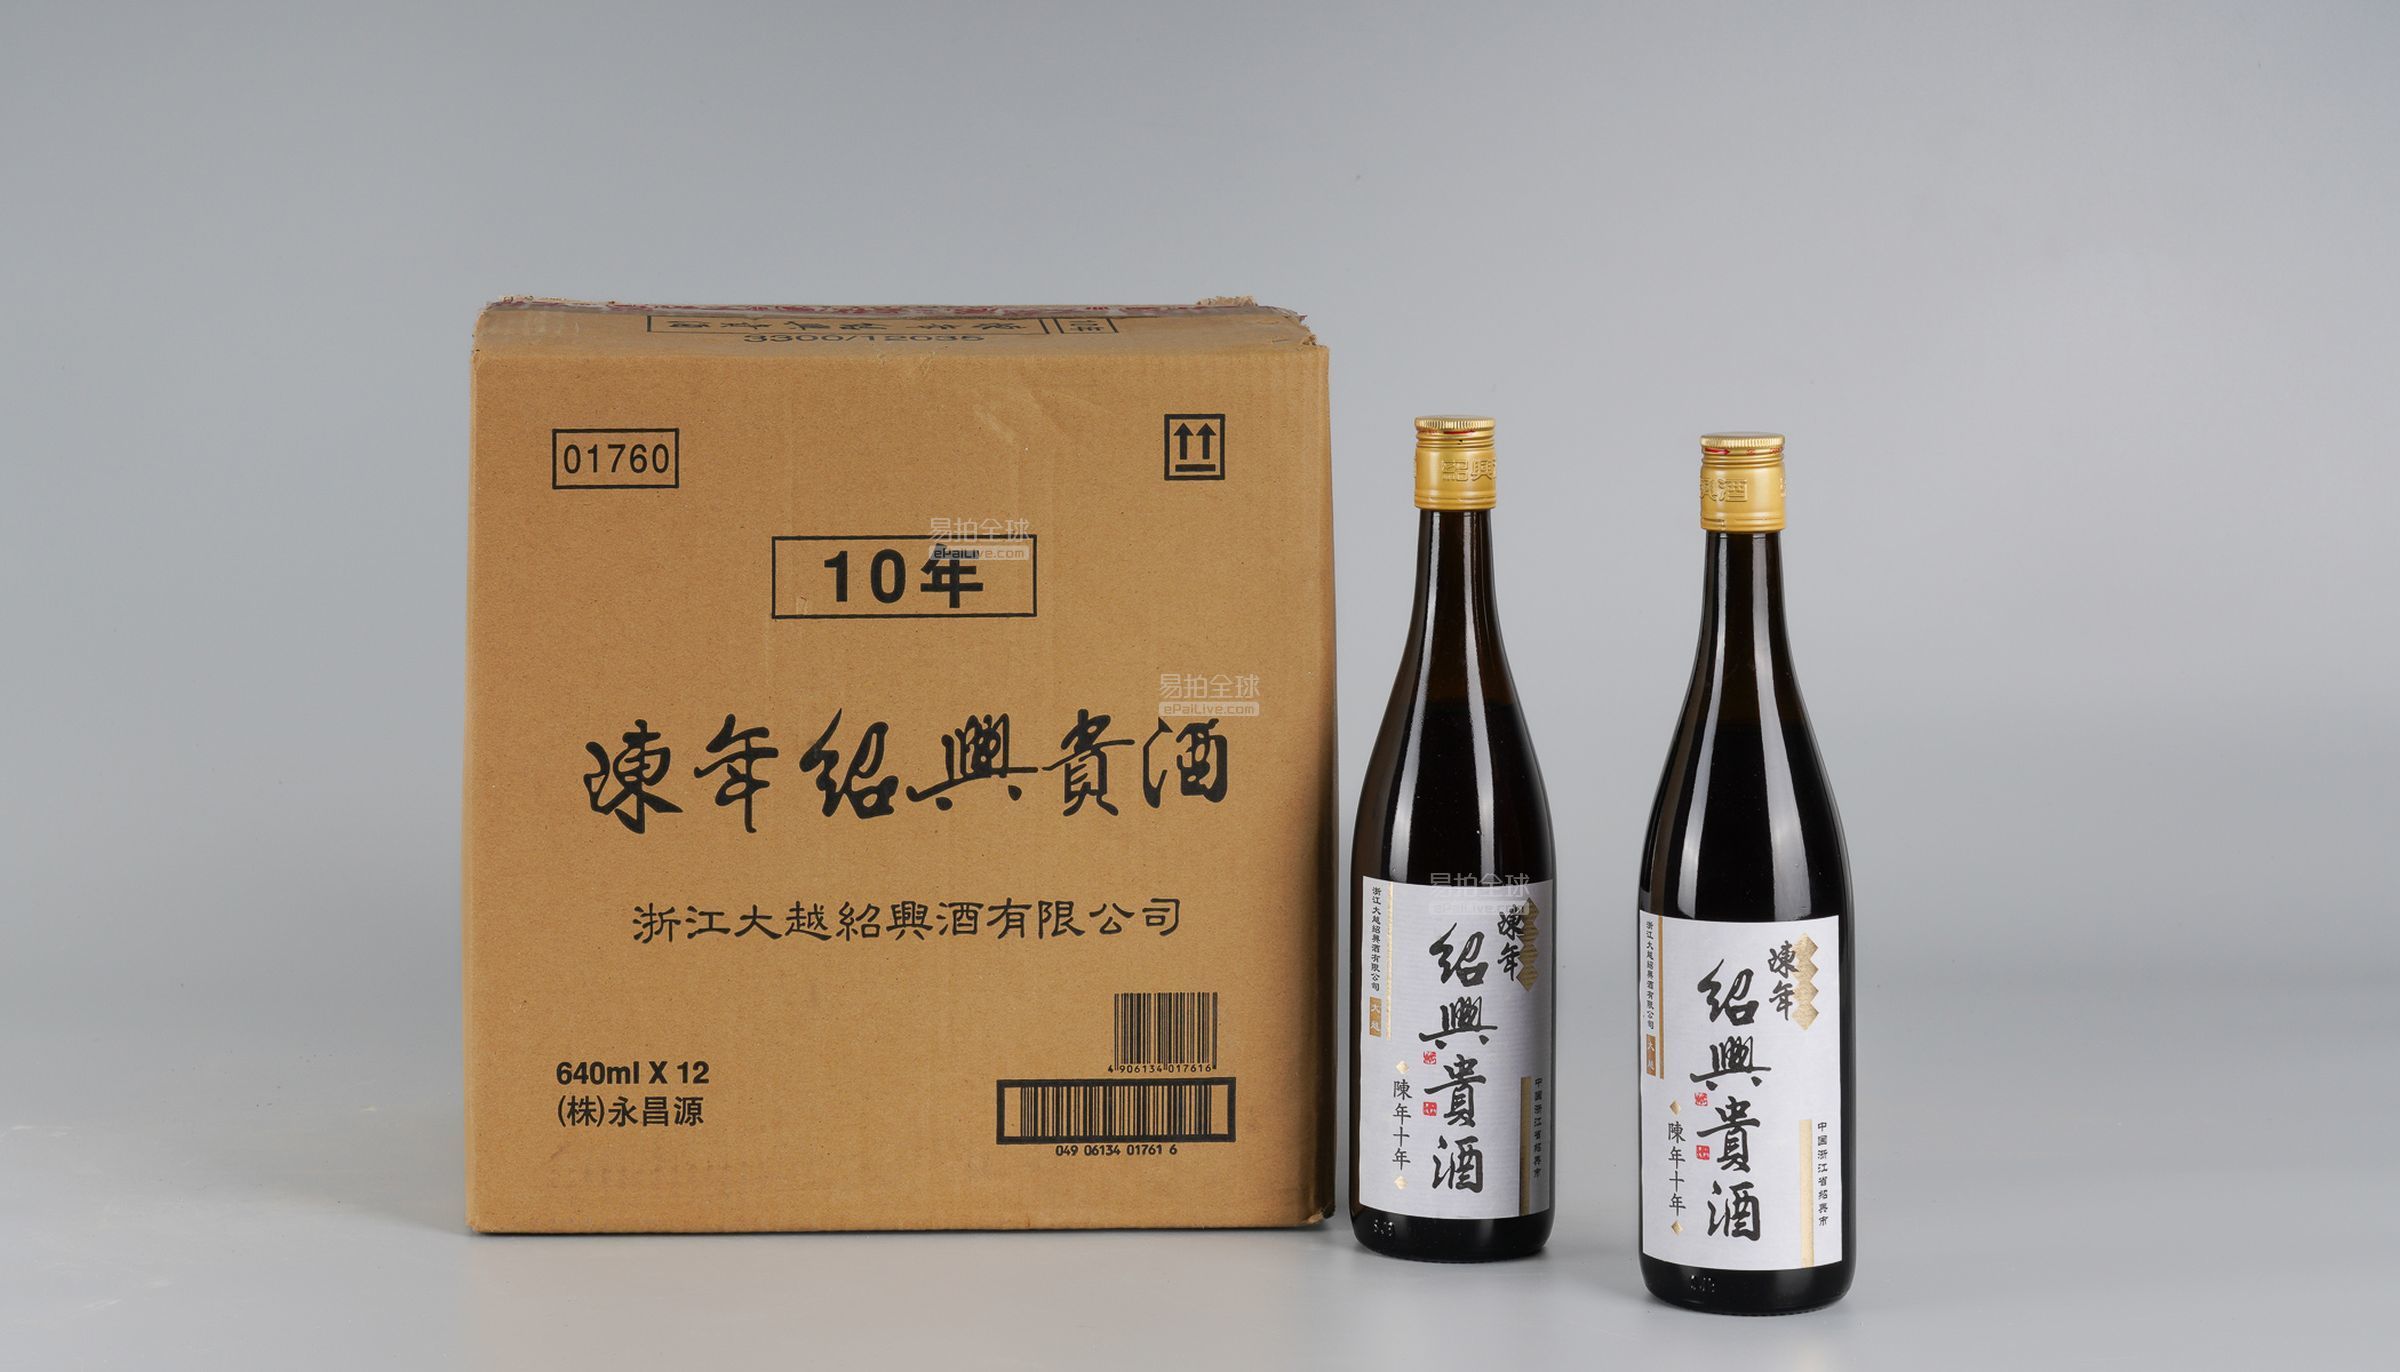 OUTLET SALE 紹興貴酒 8年 640ml 中国酒 紹興酒 riosmauricio.com